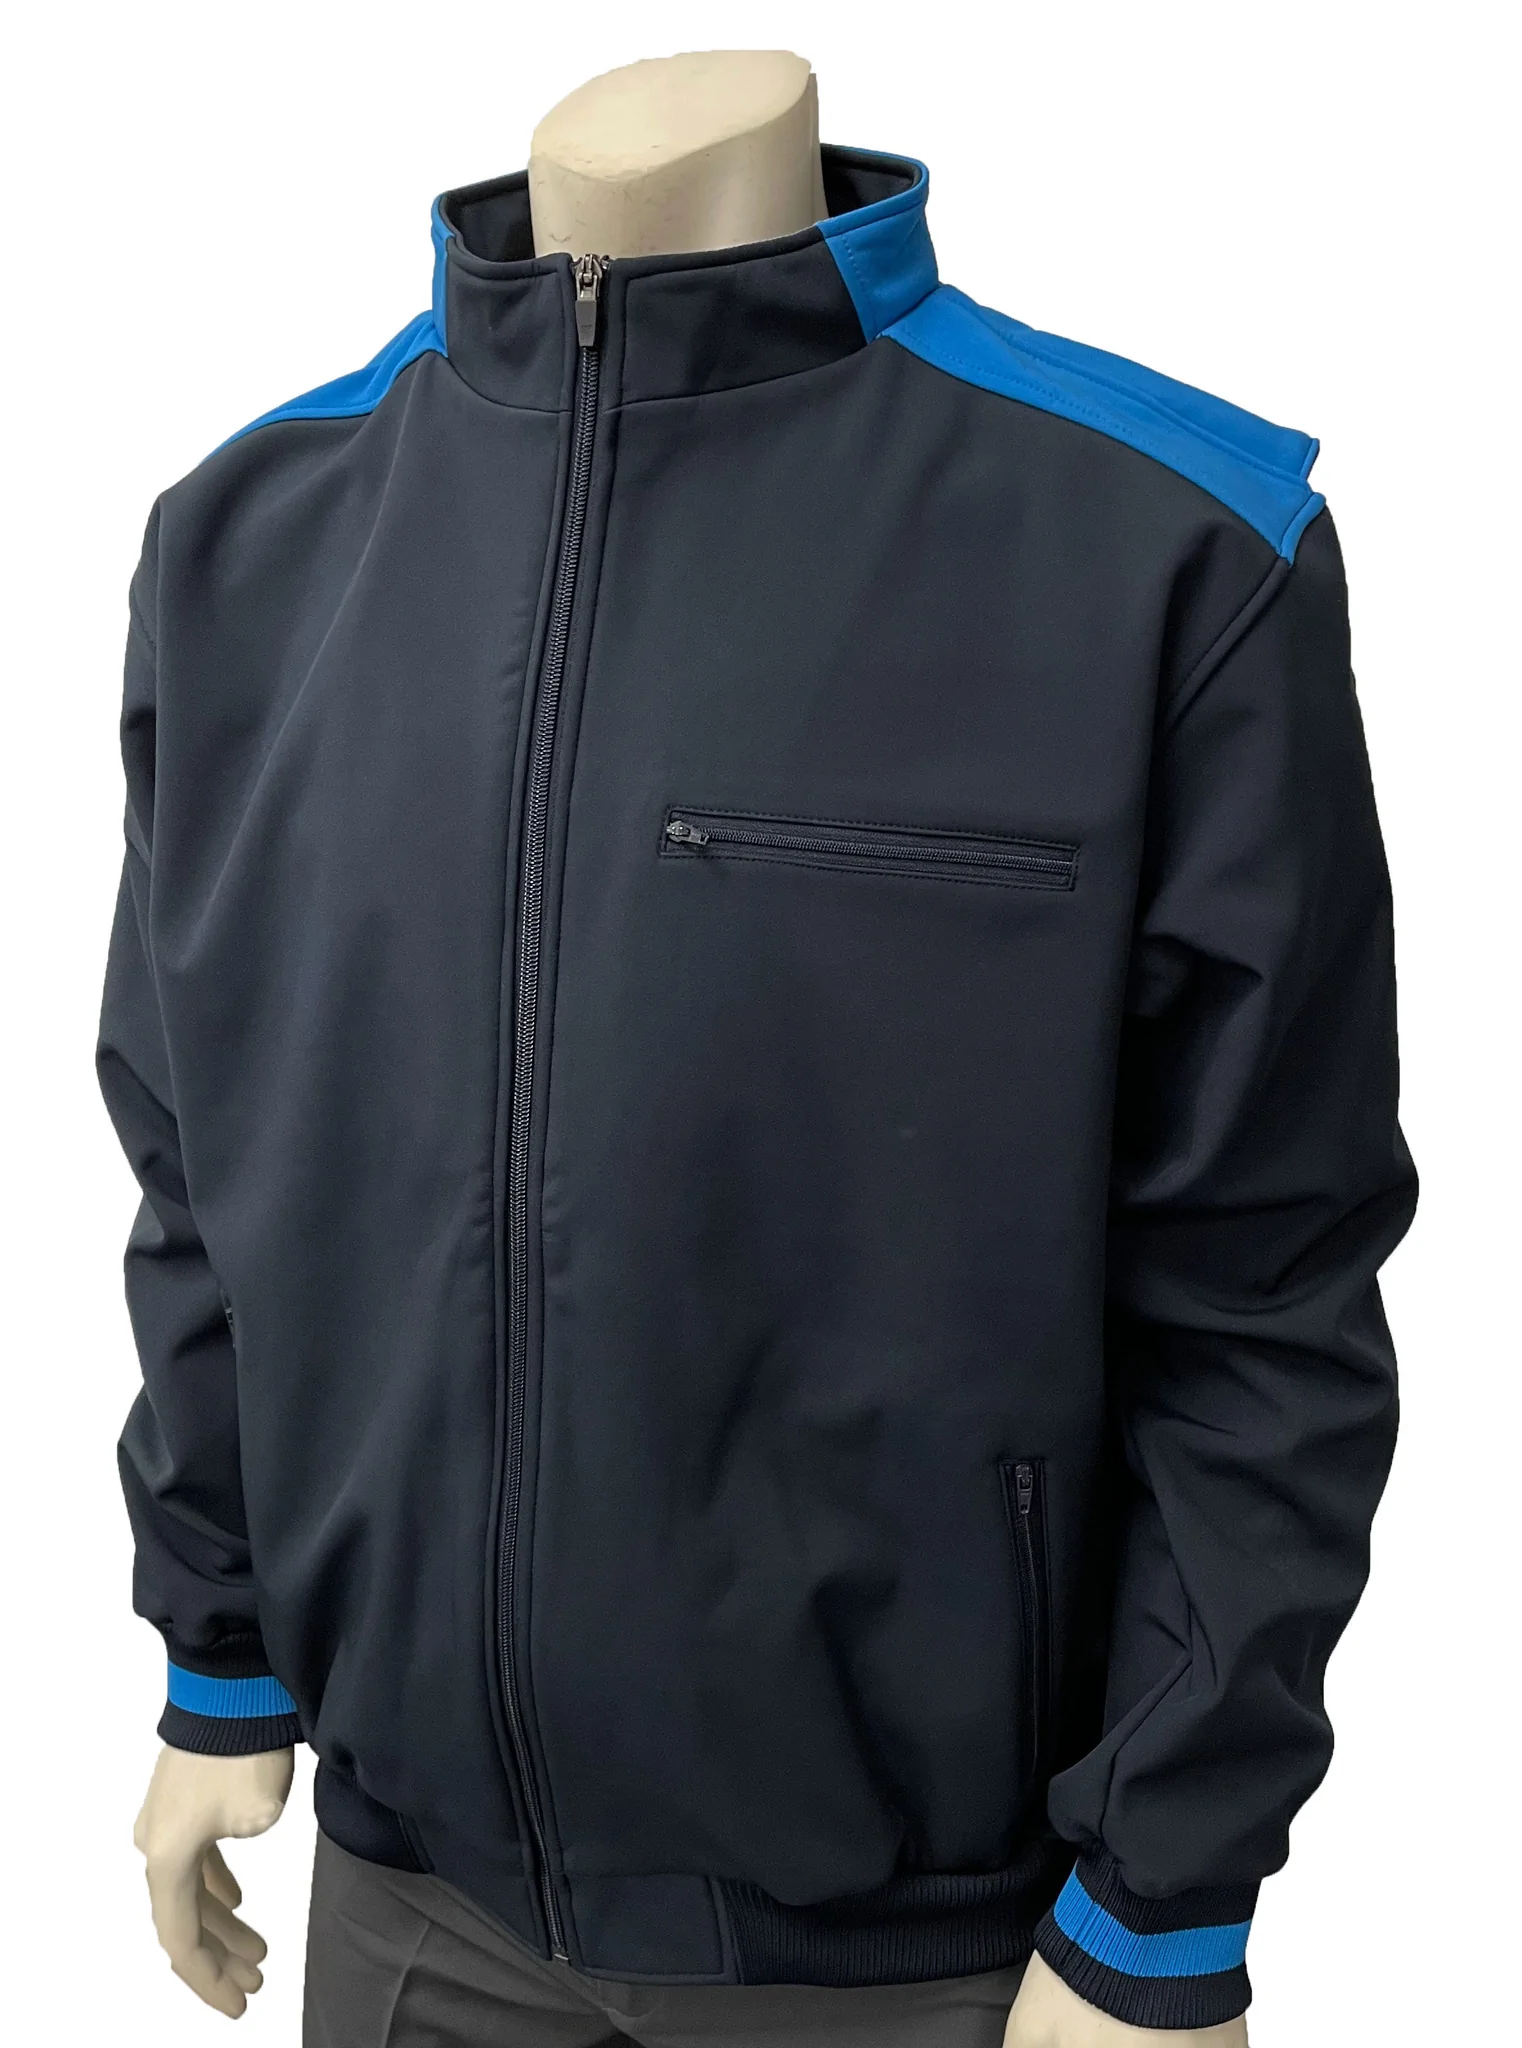 BBS343 - Smitty NCAA Softball Style Full Zip Thermal Fleece Umpire Jacket